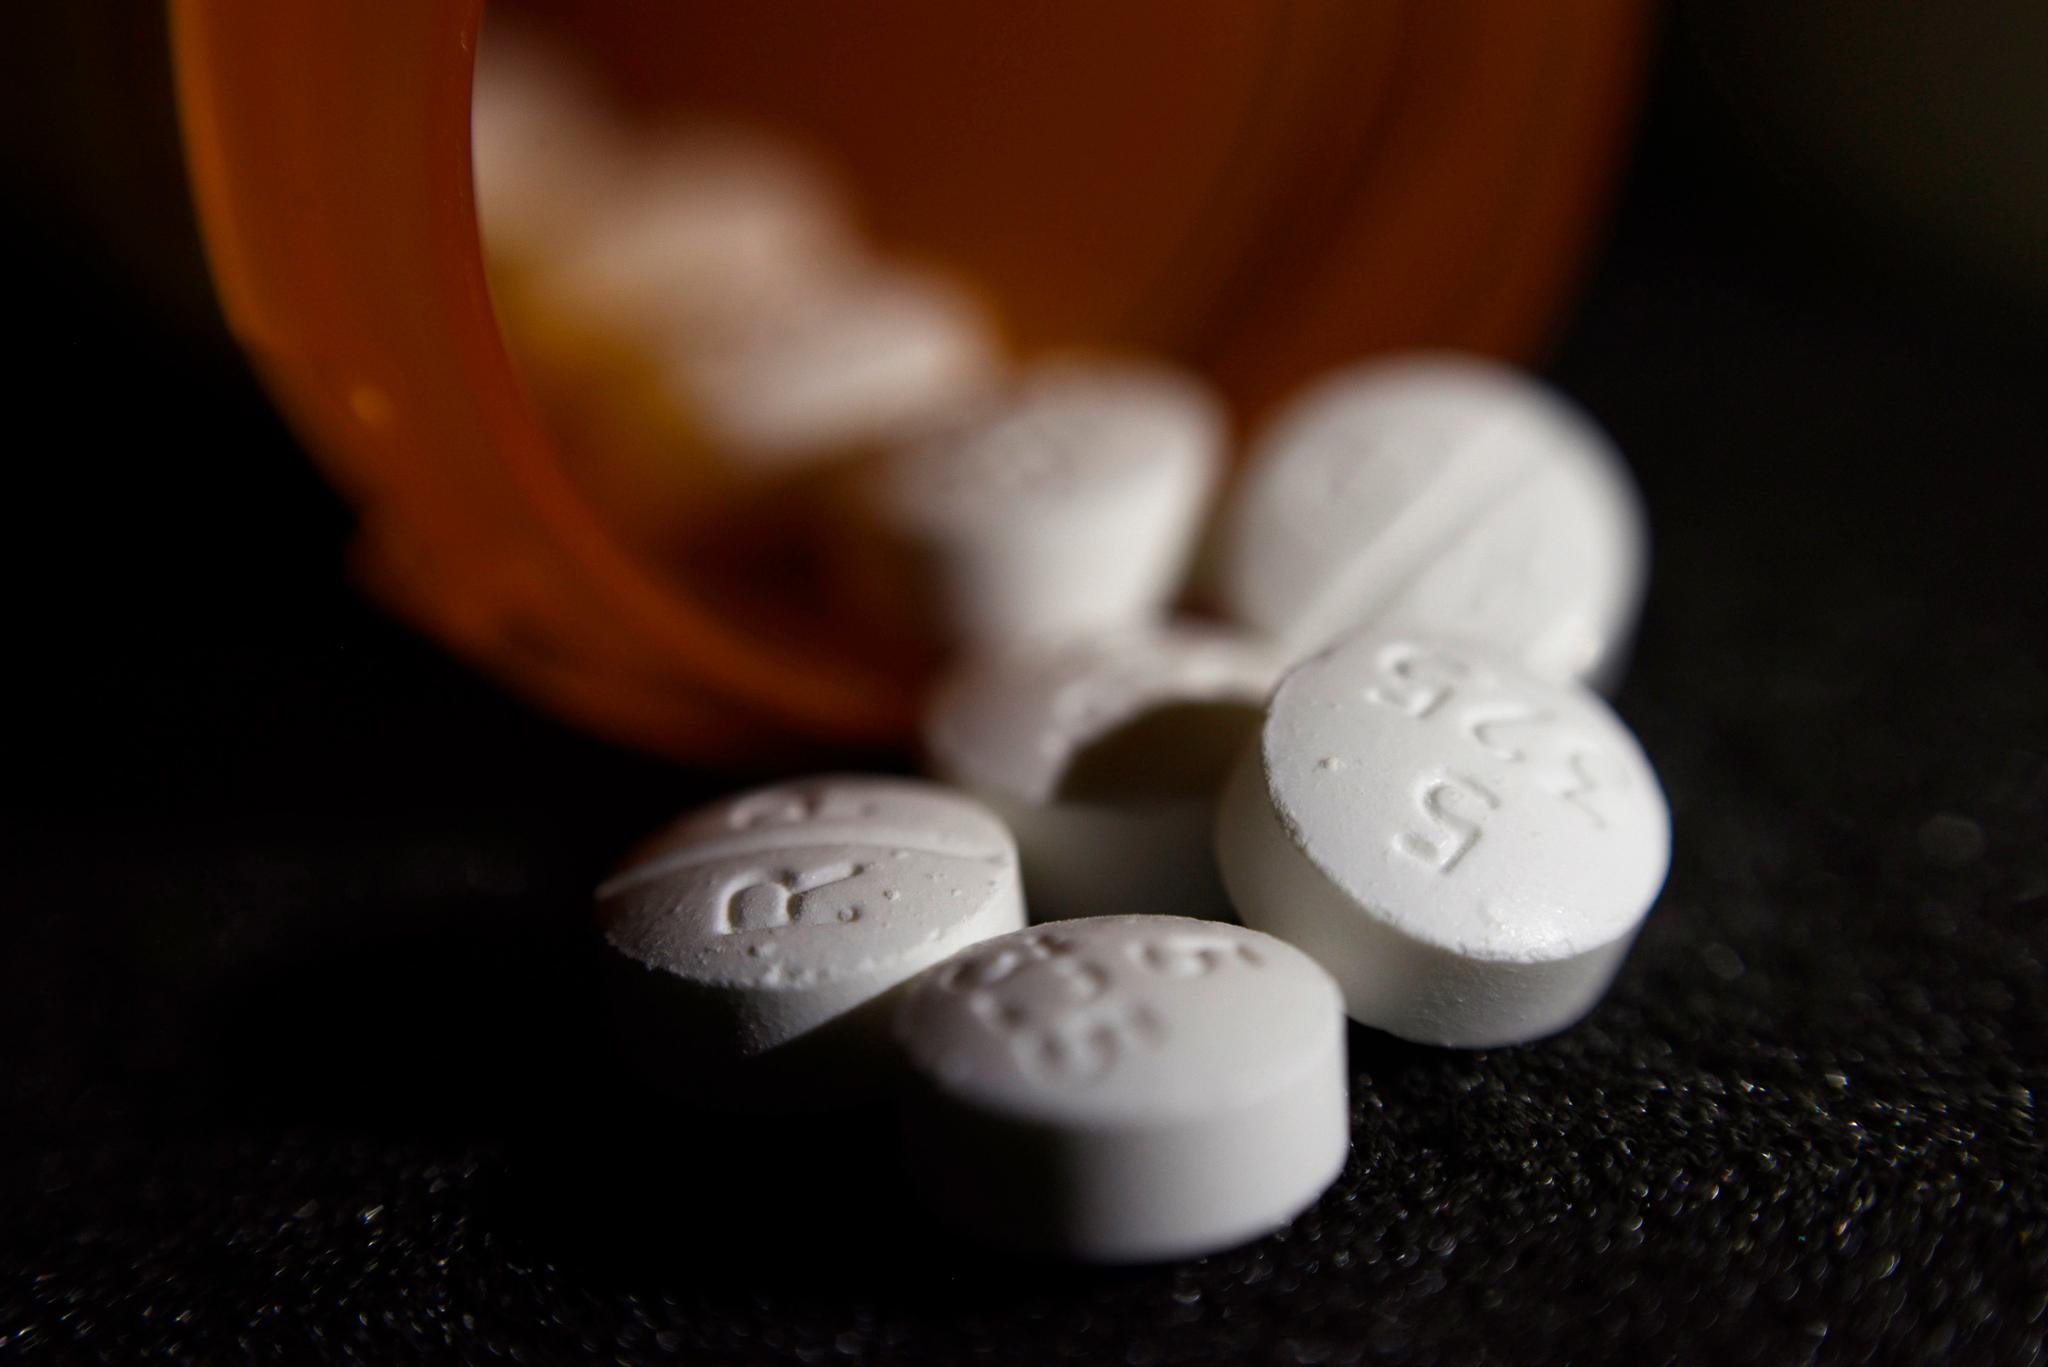 An arrangement of pills of the opioid oxycodone-acetaminophen